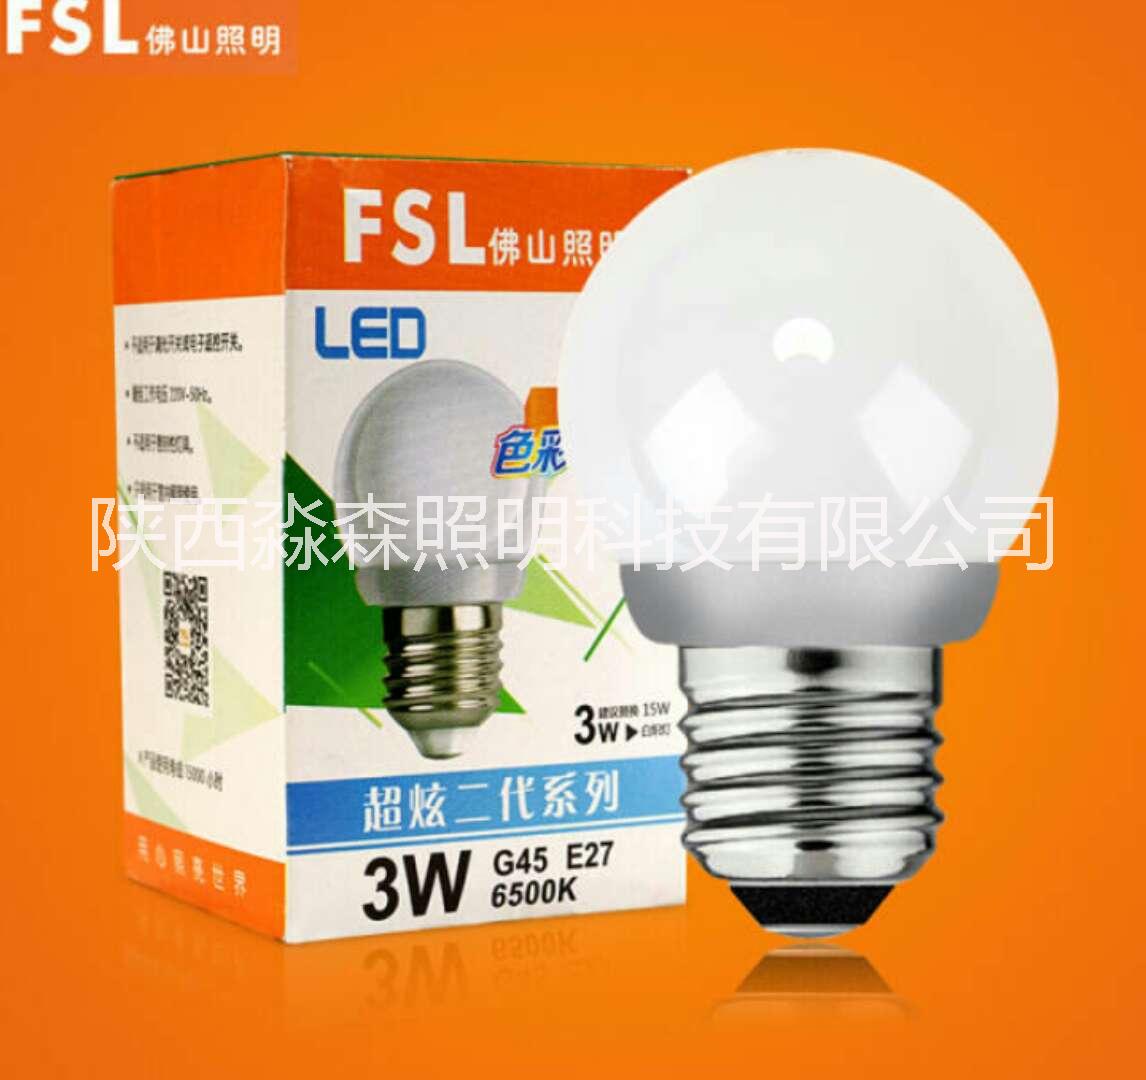 LED灯，照明灯，吸顶灯，浴霸，安全出口 佛山照明LED3W球泡图片